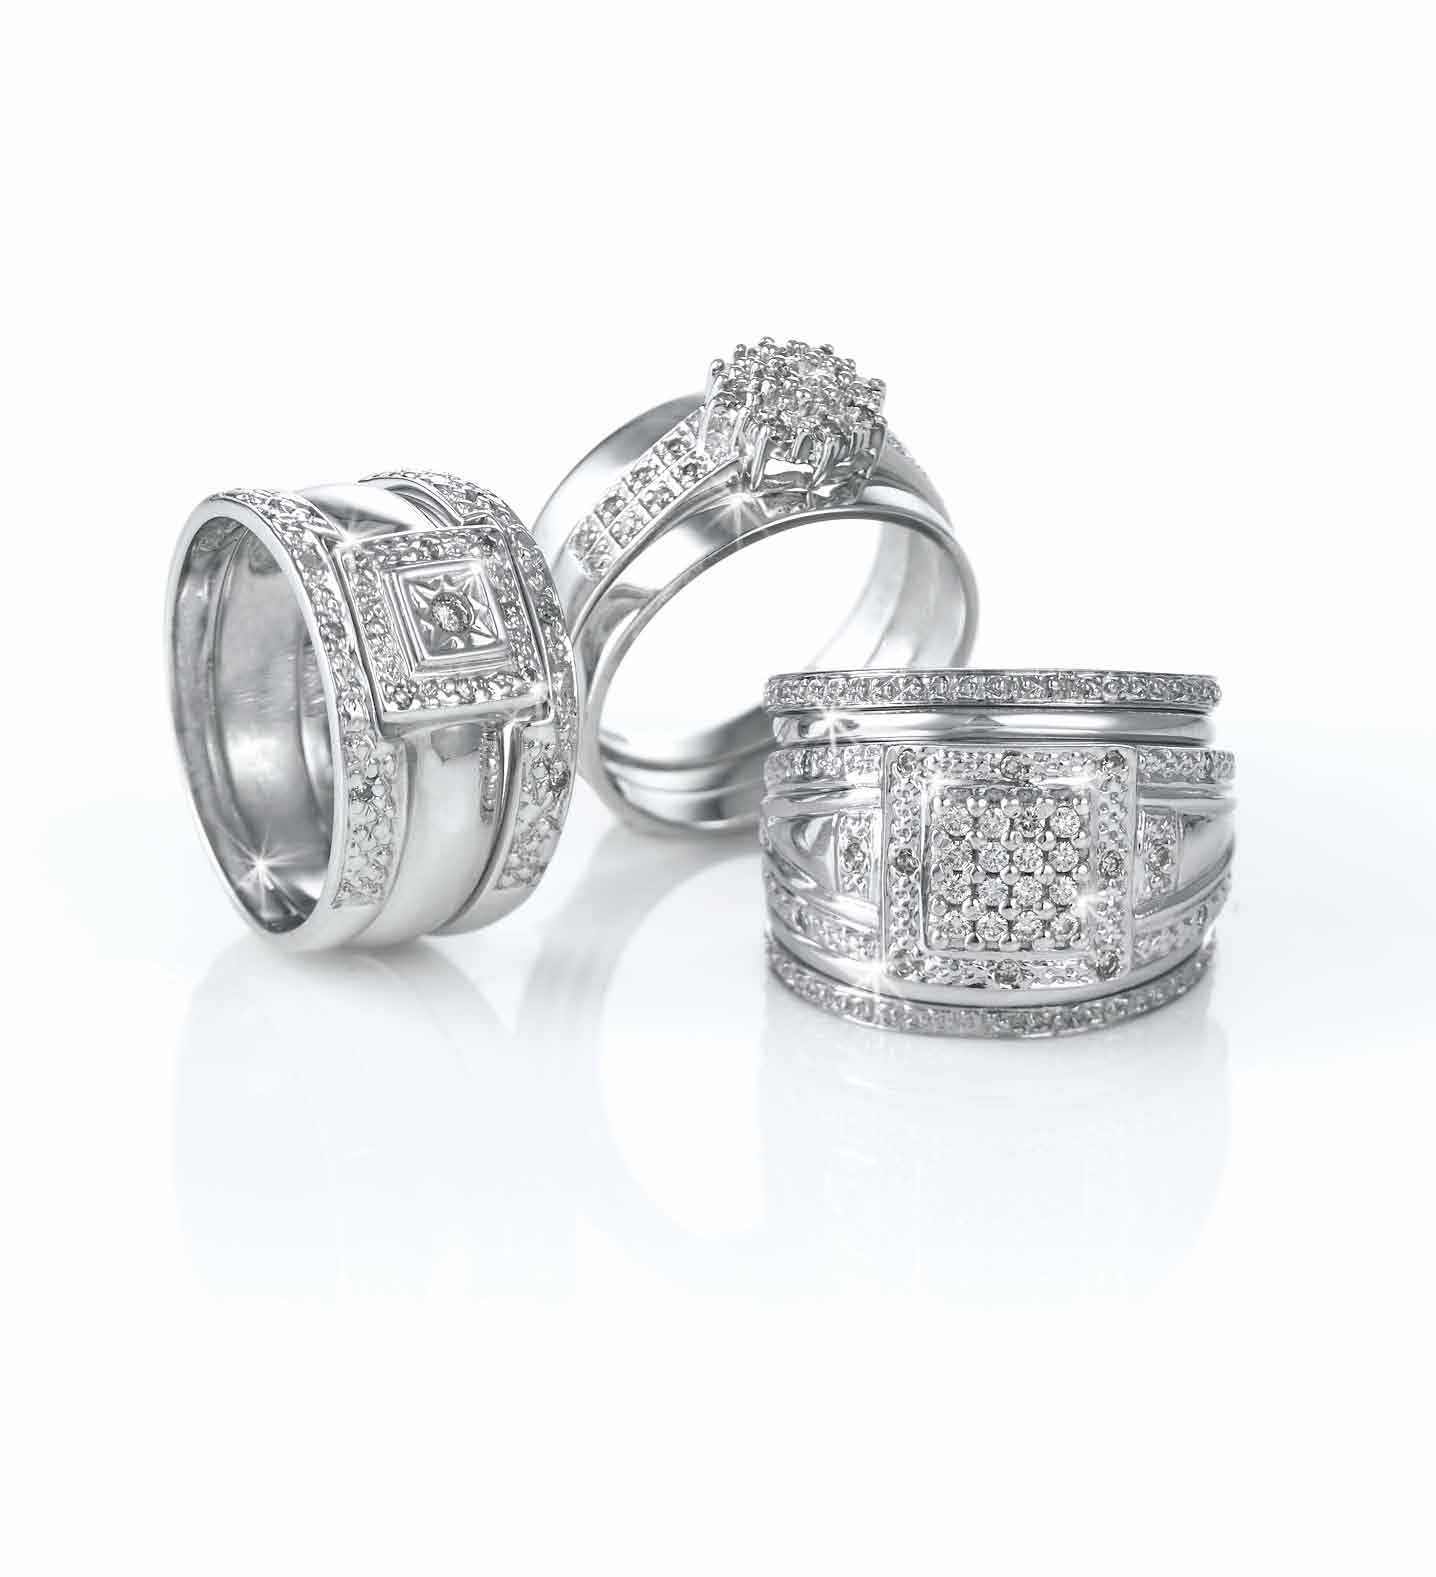 9ct Diamond Wedding Rings (fltr) R4,399.00, R5,599.00, R6,399.00